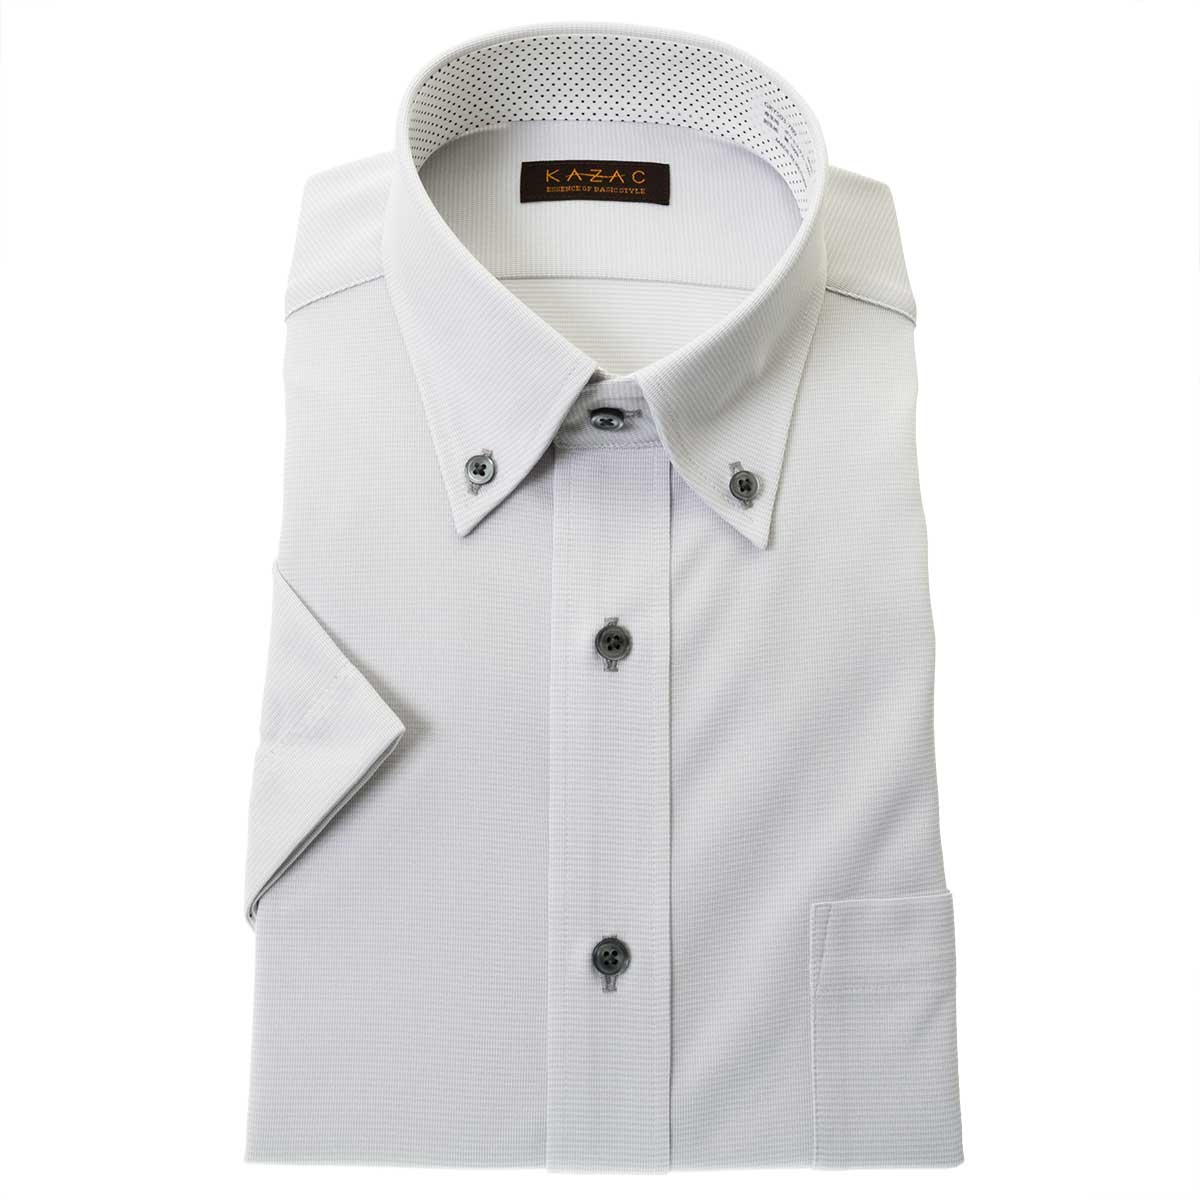 KAZAC 半袖 ニットシャツ(裄詰不可)ボタンダウン グレー ワイシャツ